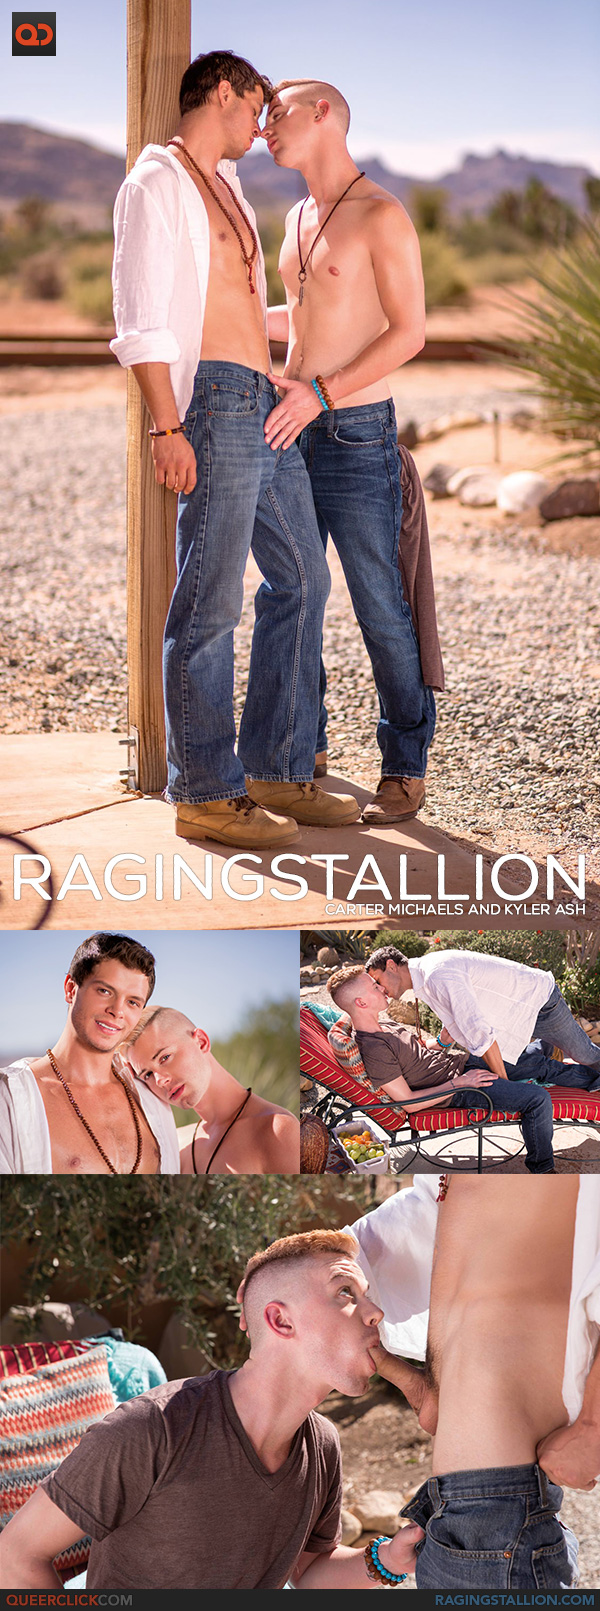 Raging Stallion: Carter Michaels and Kyler Ash